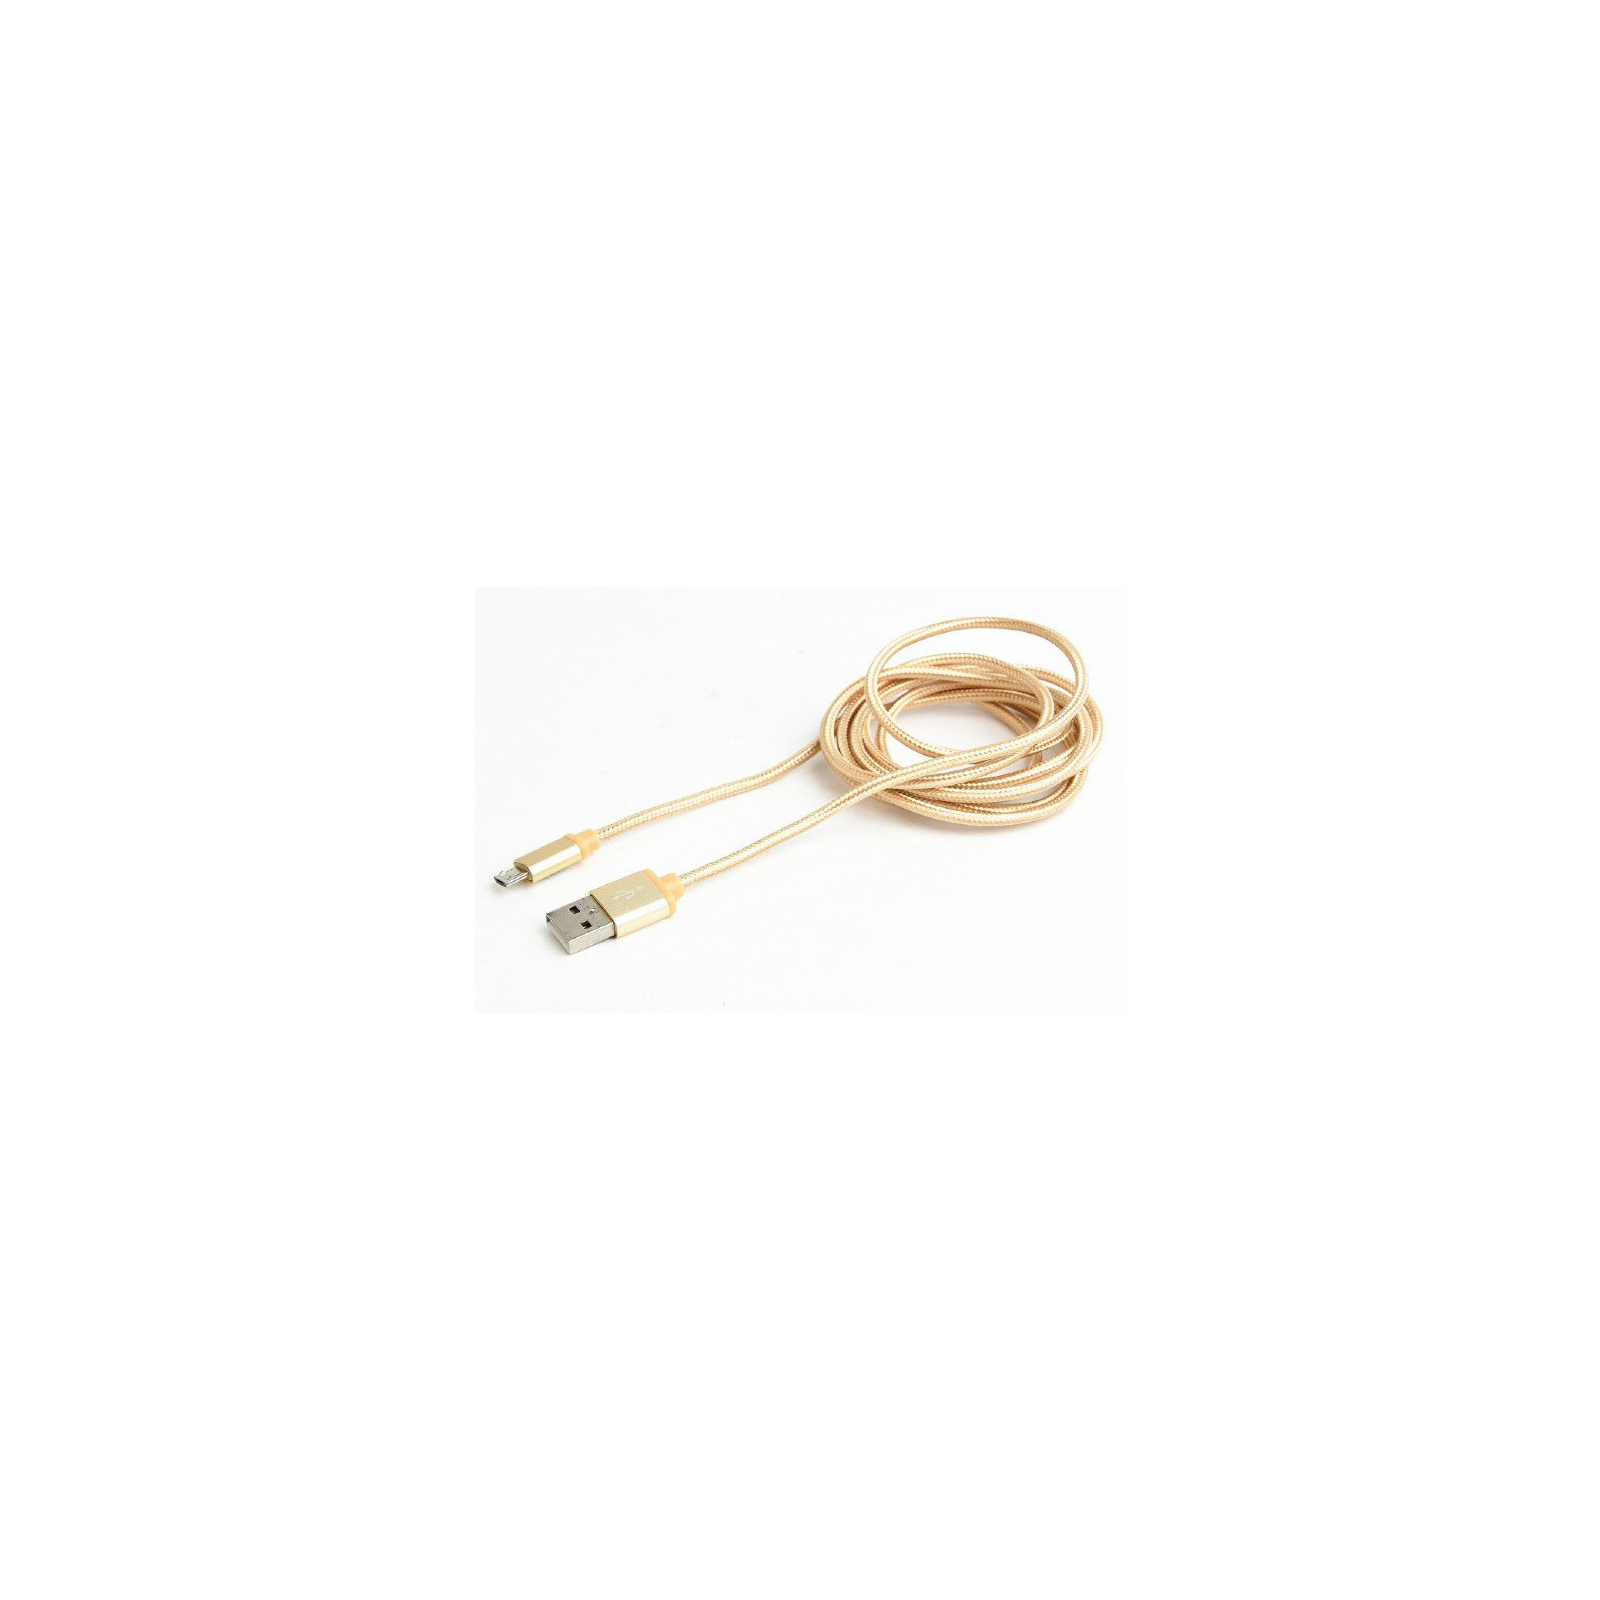 Дата кабель USB 2.0 AM to Micro 5P 1.8m Cablexpert (CCB-mUSB2B-AMBM-6)